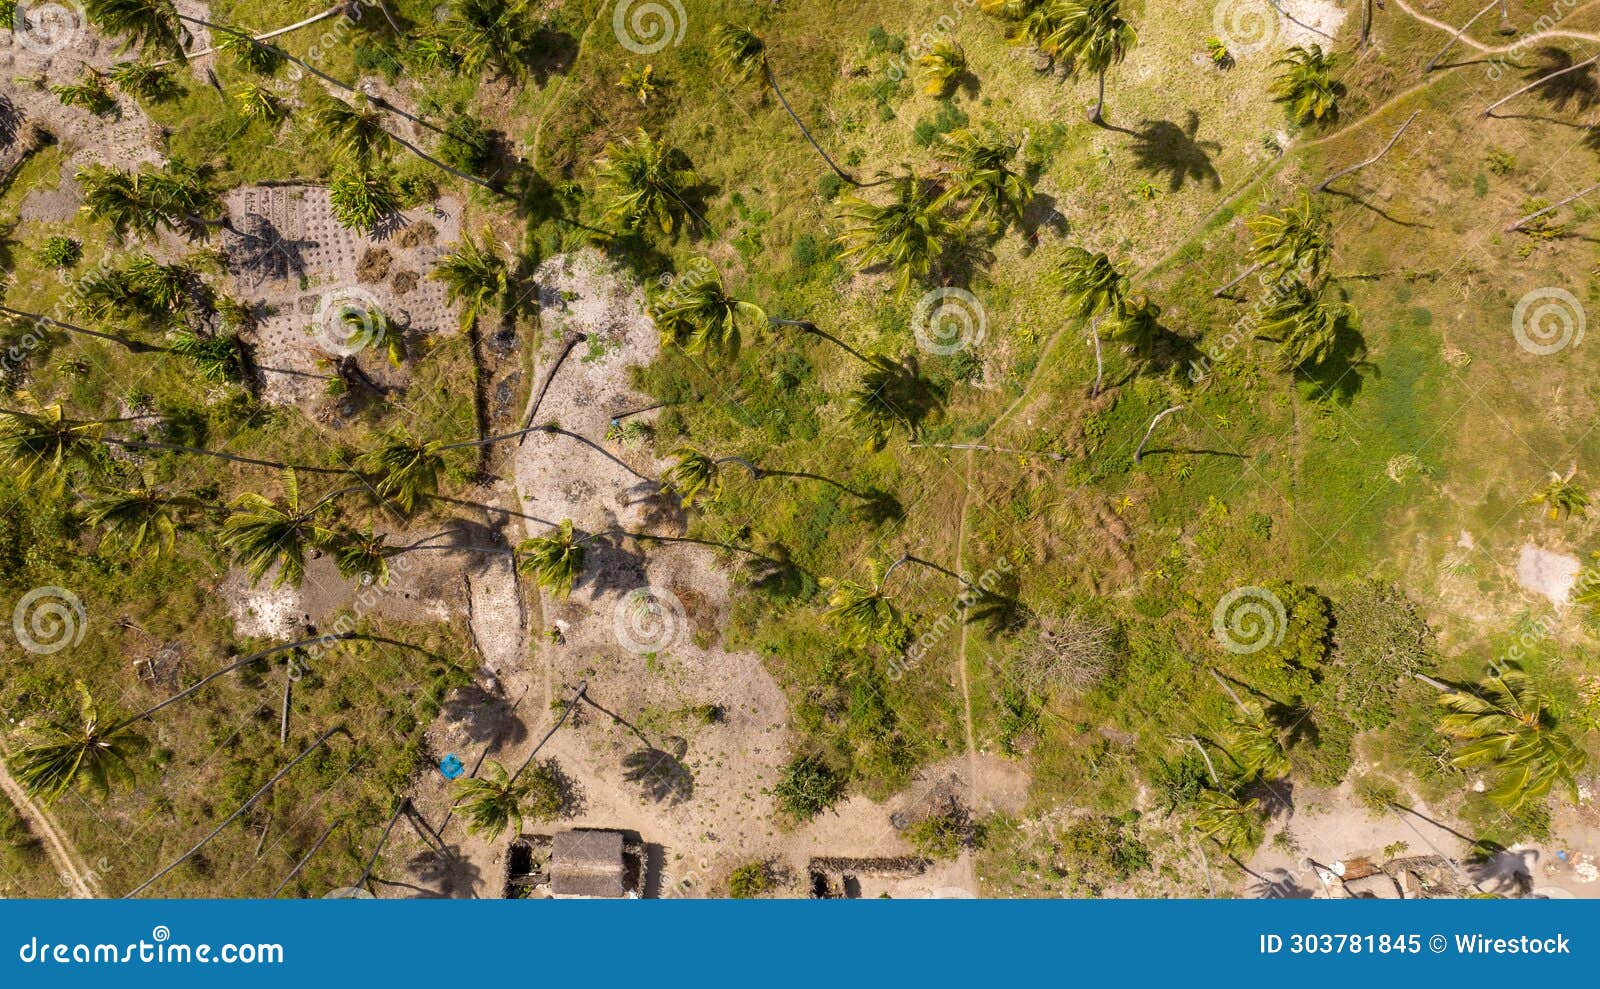 aerial view of palma district in cabo delgado, mozambique